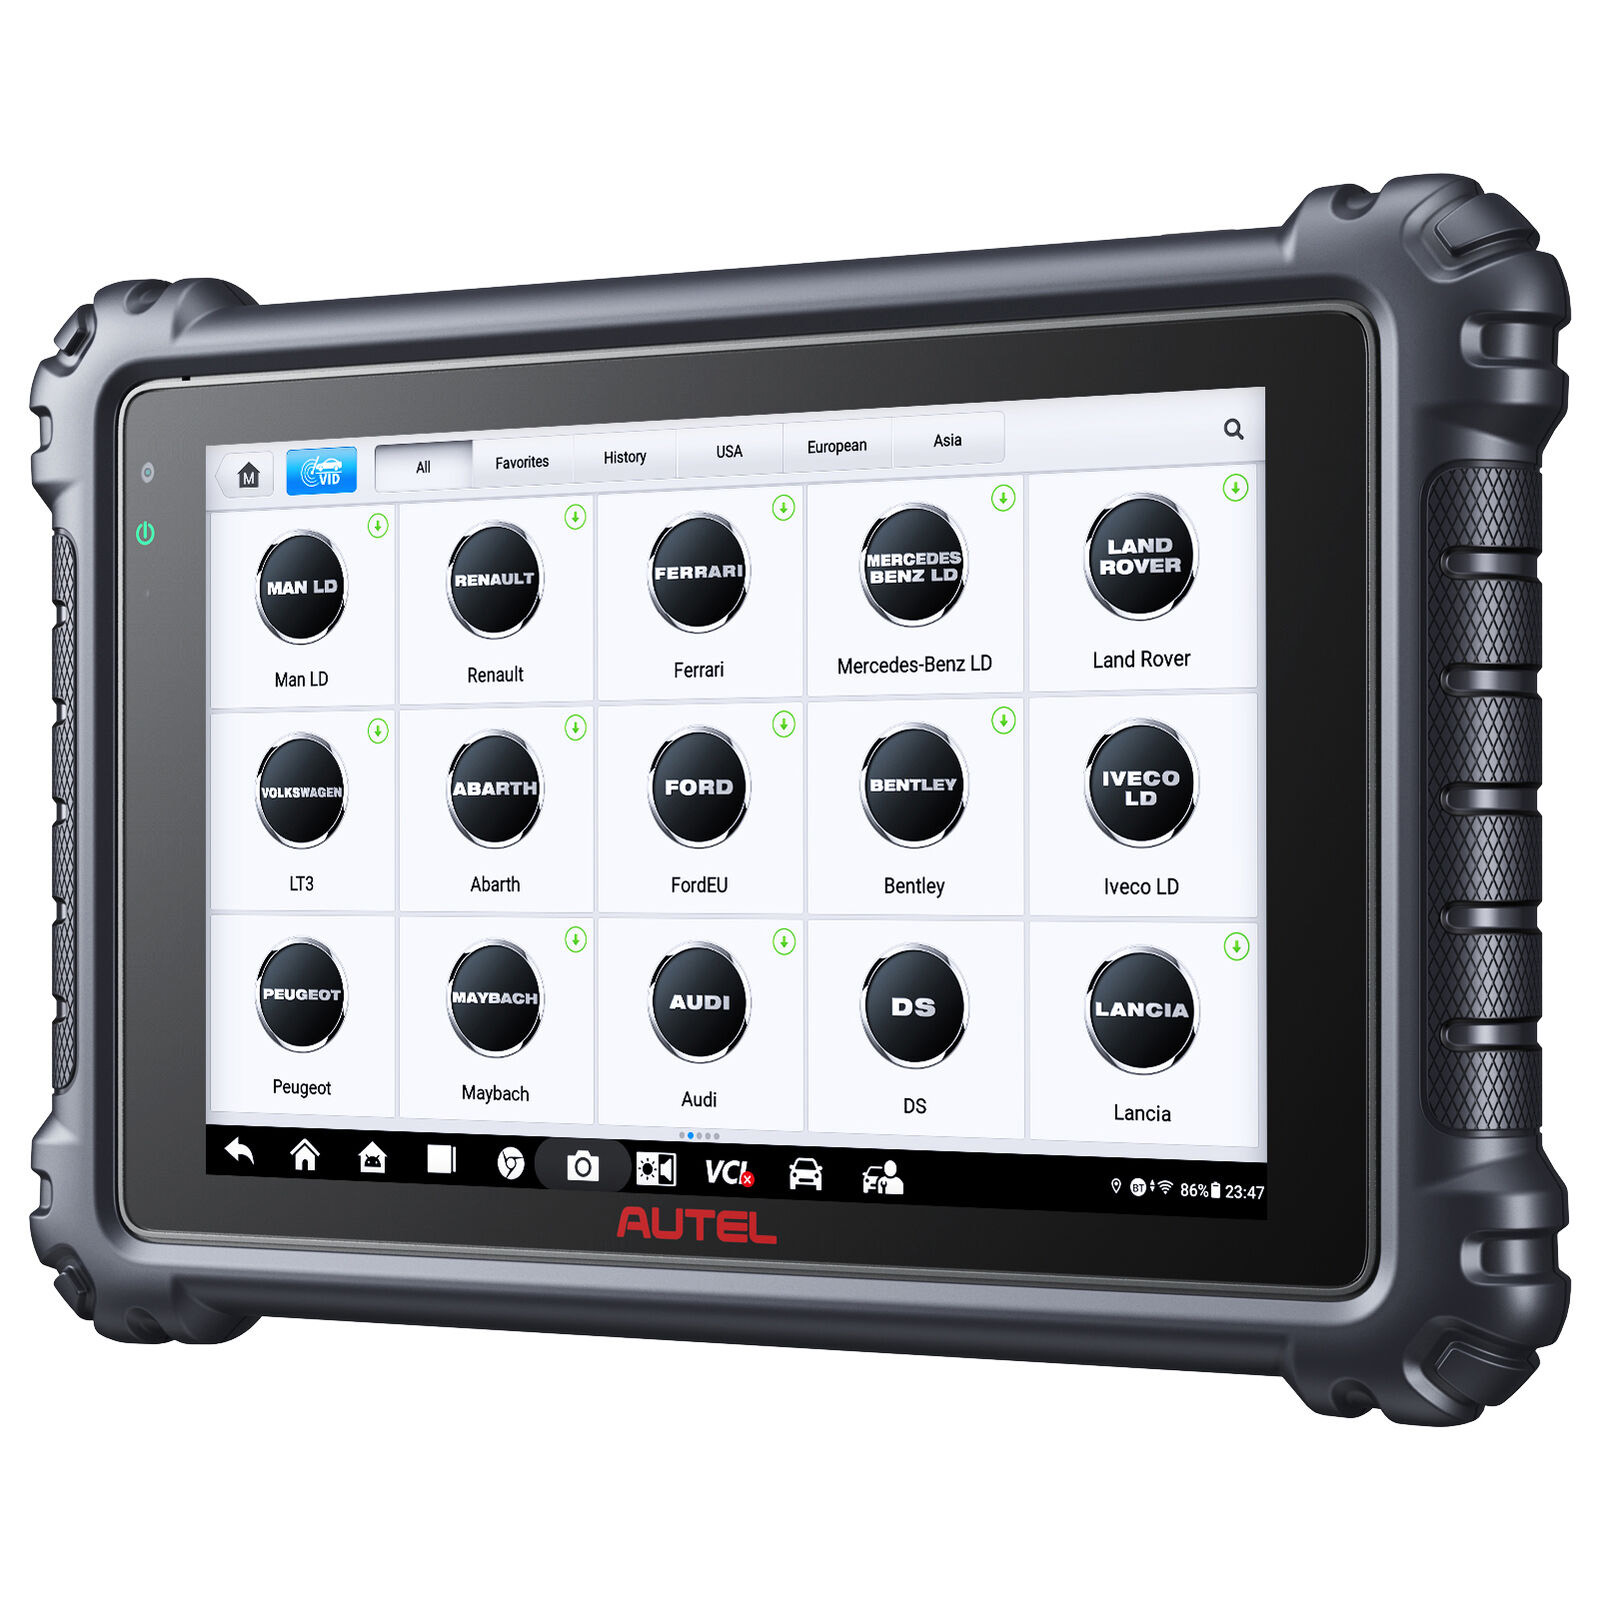 Autel Scanner MaxiSYS MS906 Pro Car Diagnostic Scan Tool Bi